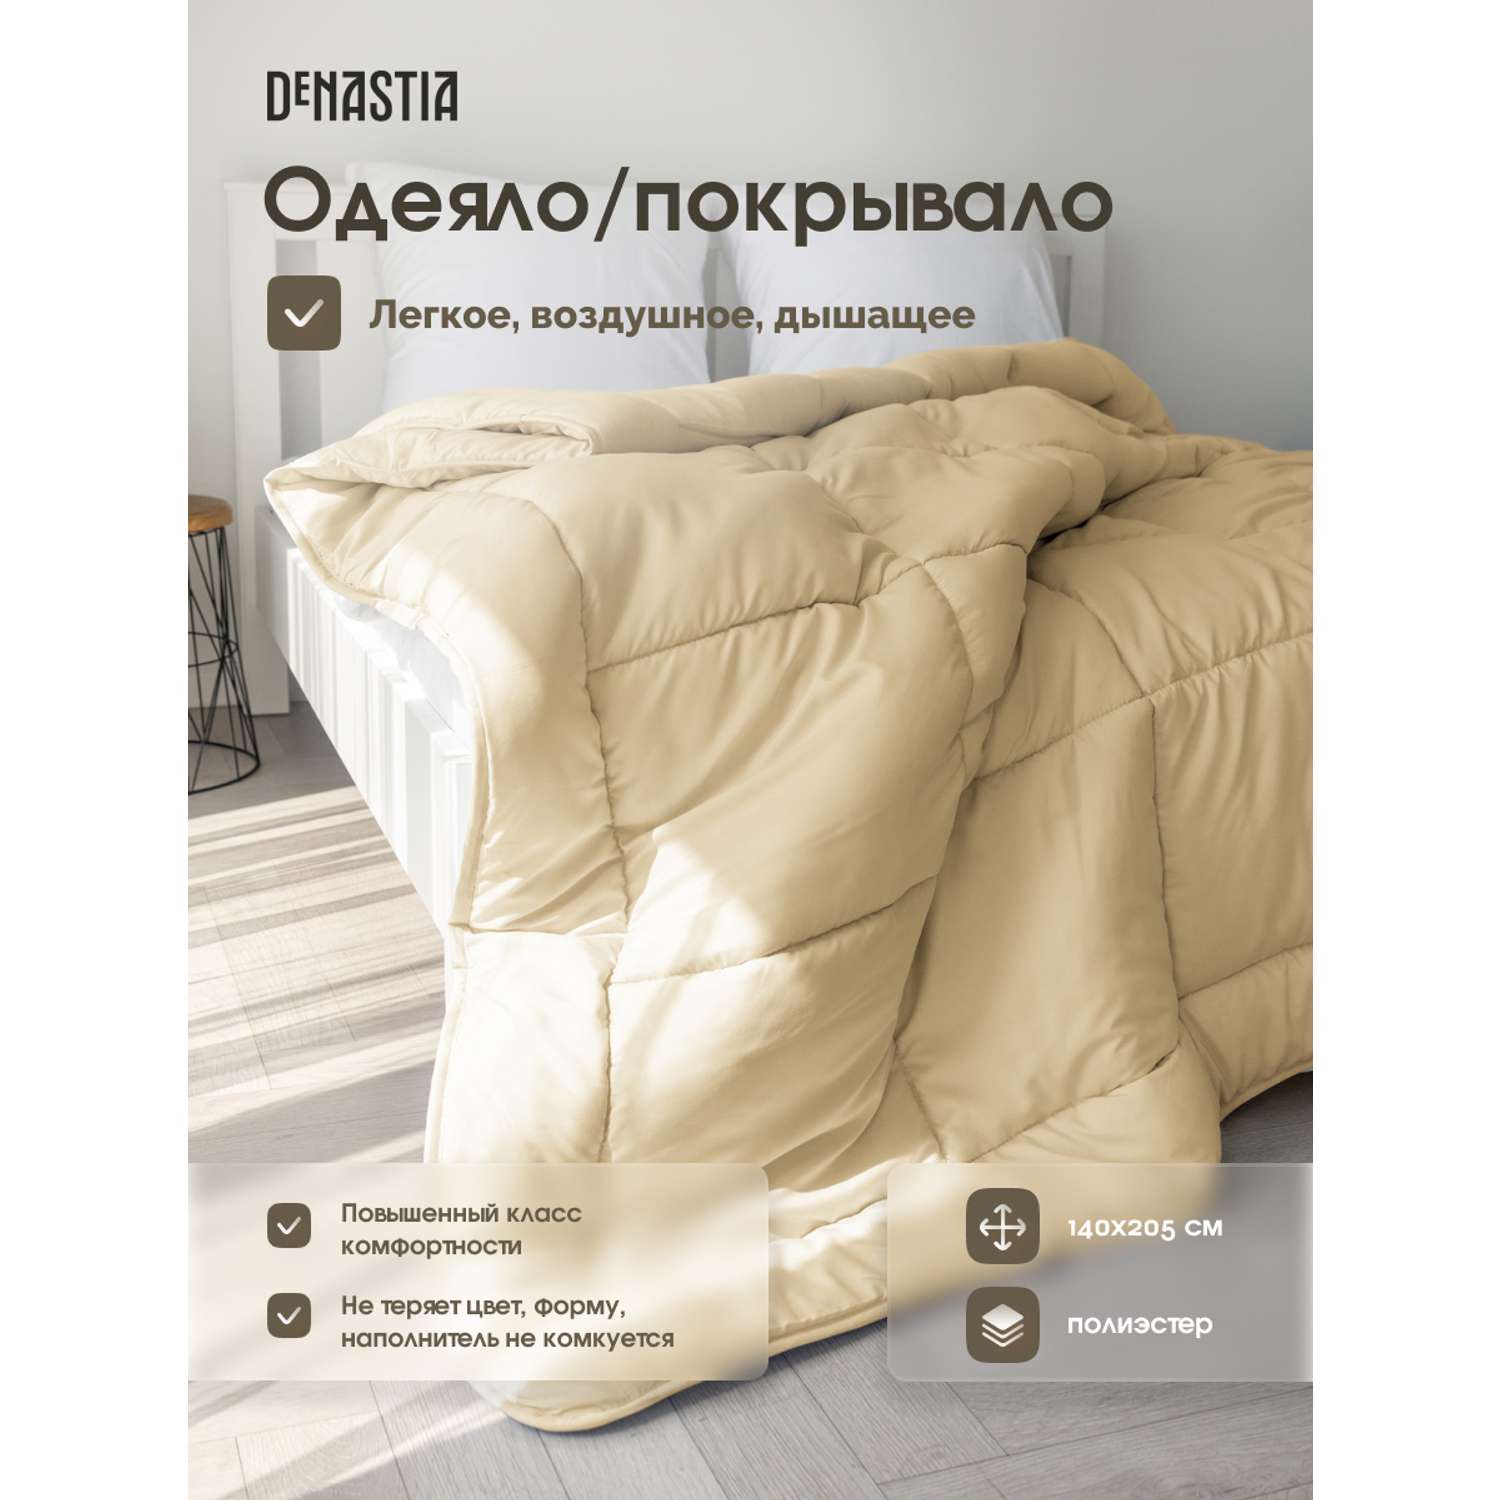 Одеяло/покрывало DeNASTIA 140x205 см желтый R020010 - фото 2